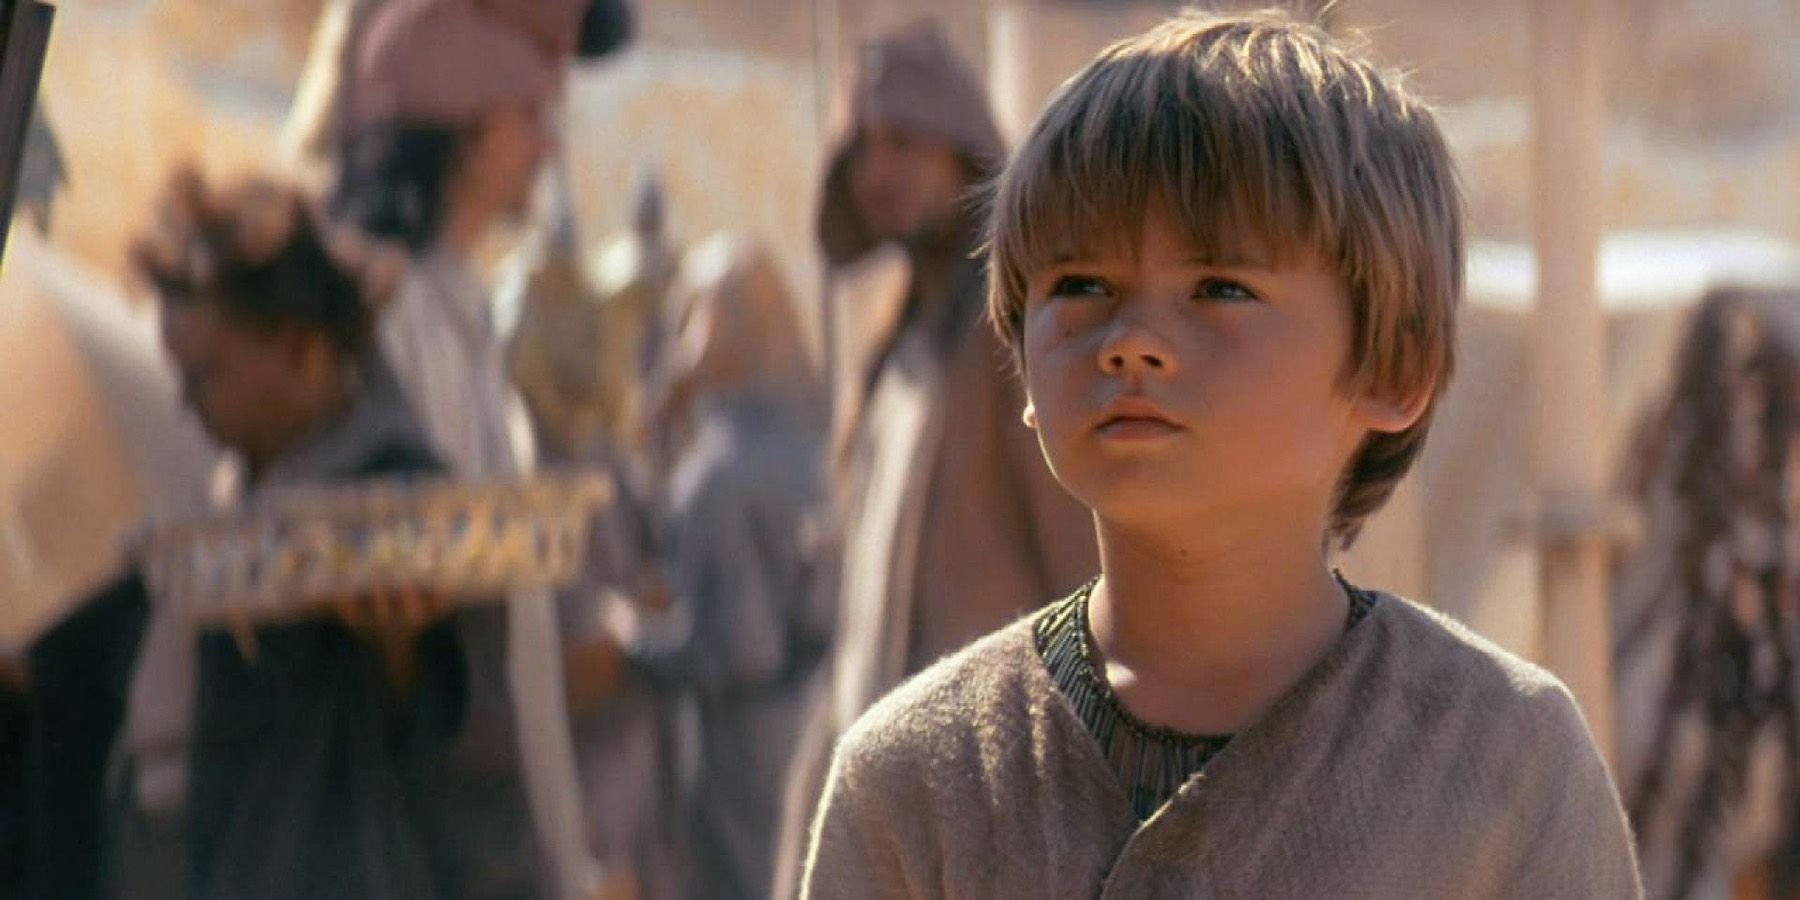 Jake Lloyd as young Anakin on Tatooine in The Phantom Menace